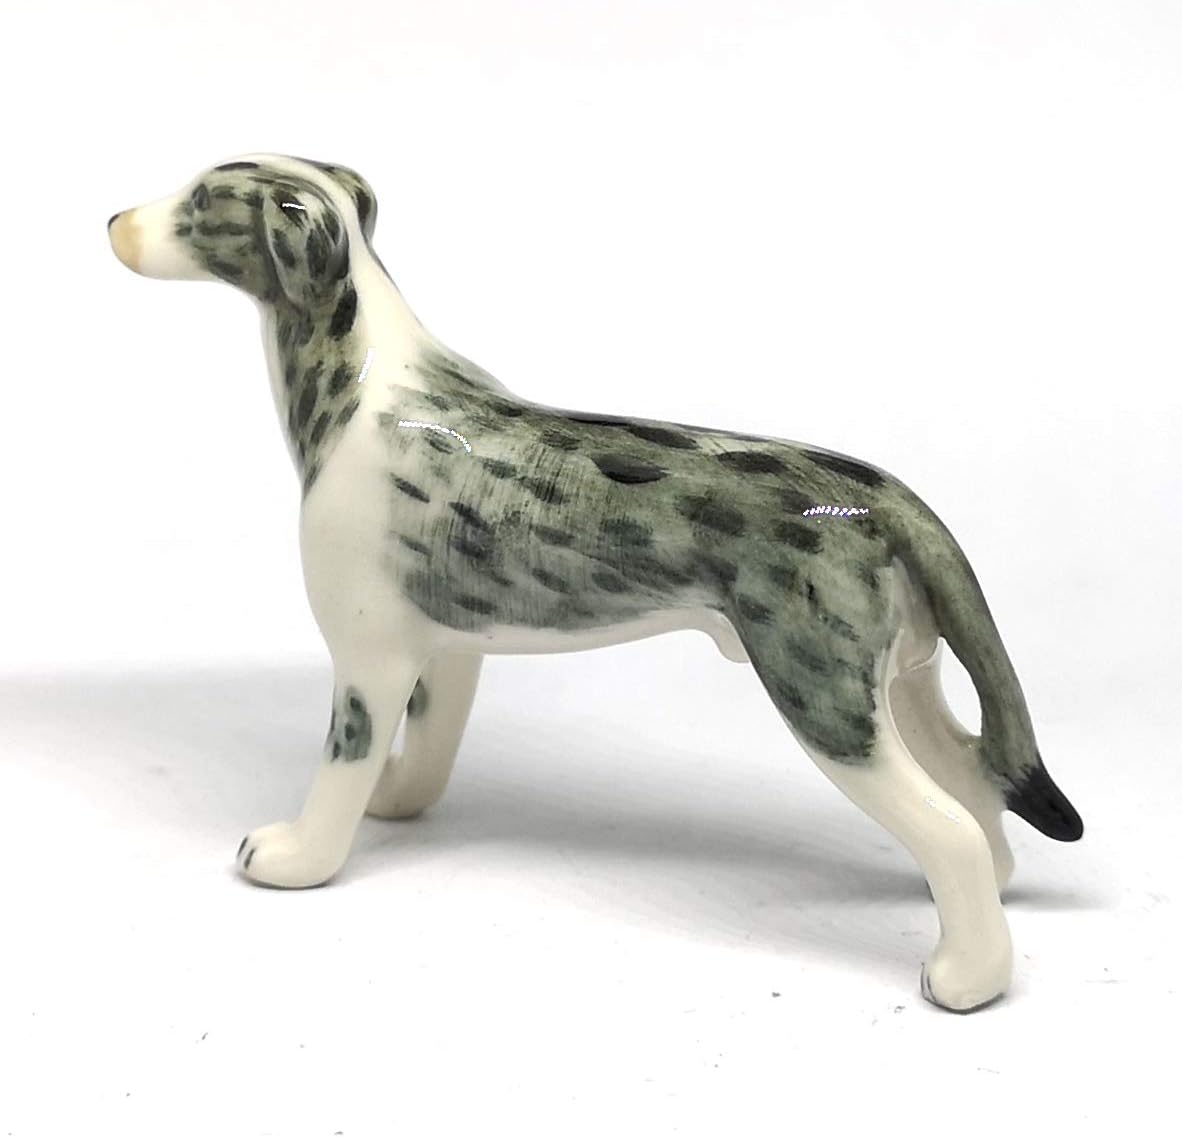 Lurcher Dog Figurine Hand Painted Porcelain Collectible Ceramic Animal Decor